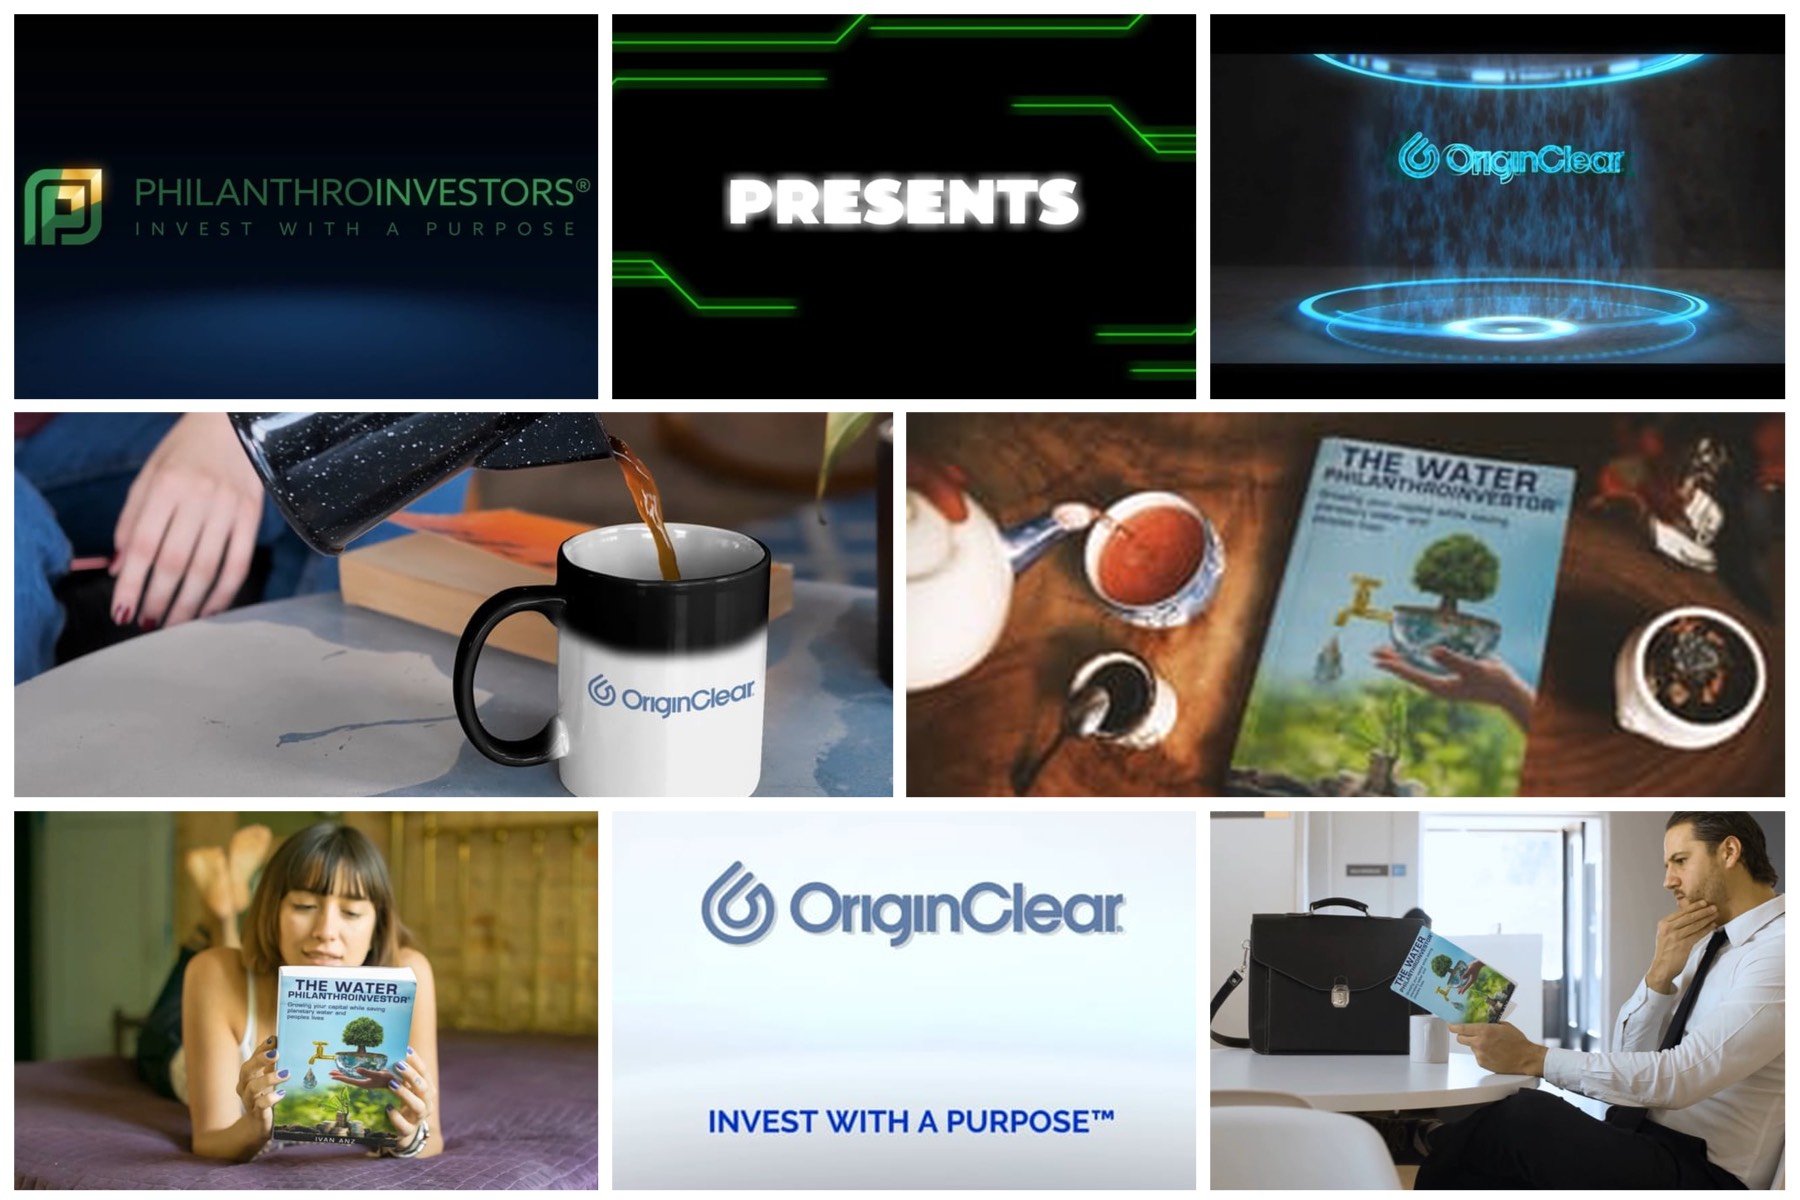 Philanthroinvestor presents OC collage